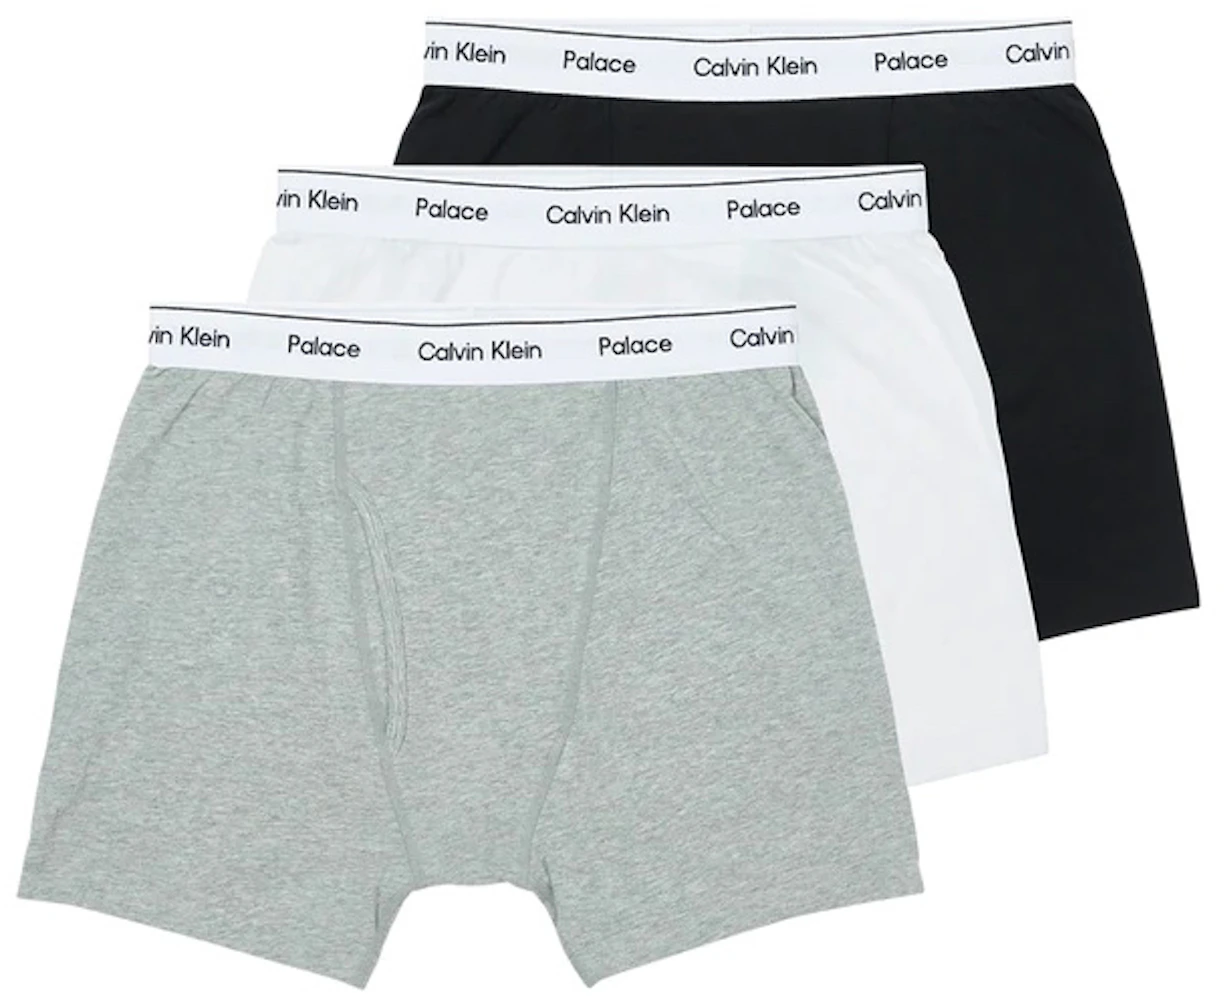 Calvin Klein Boxer Briefs 3 pack - Black with White Trim